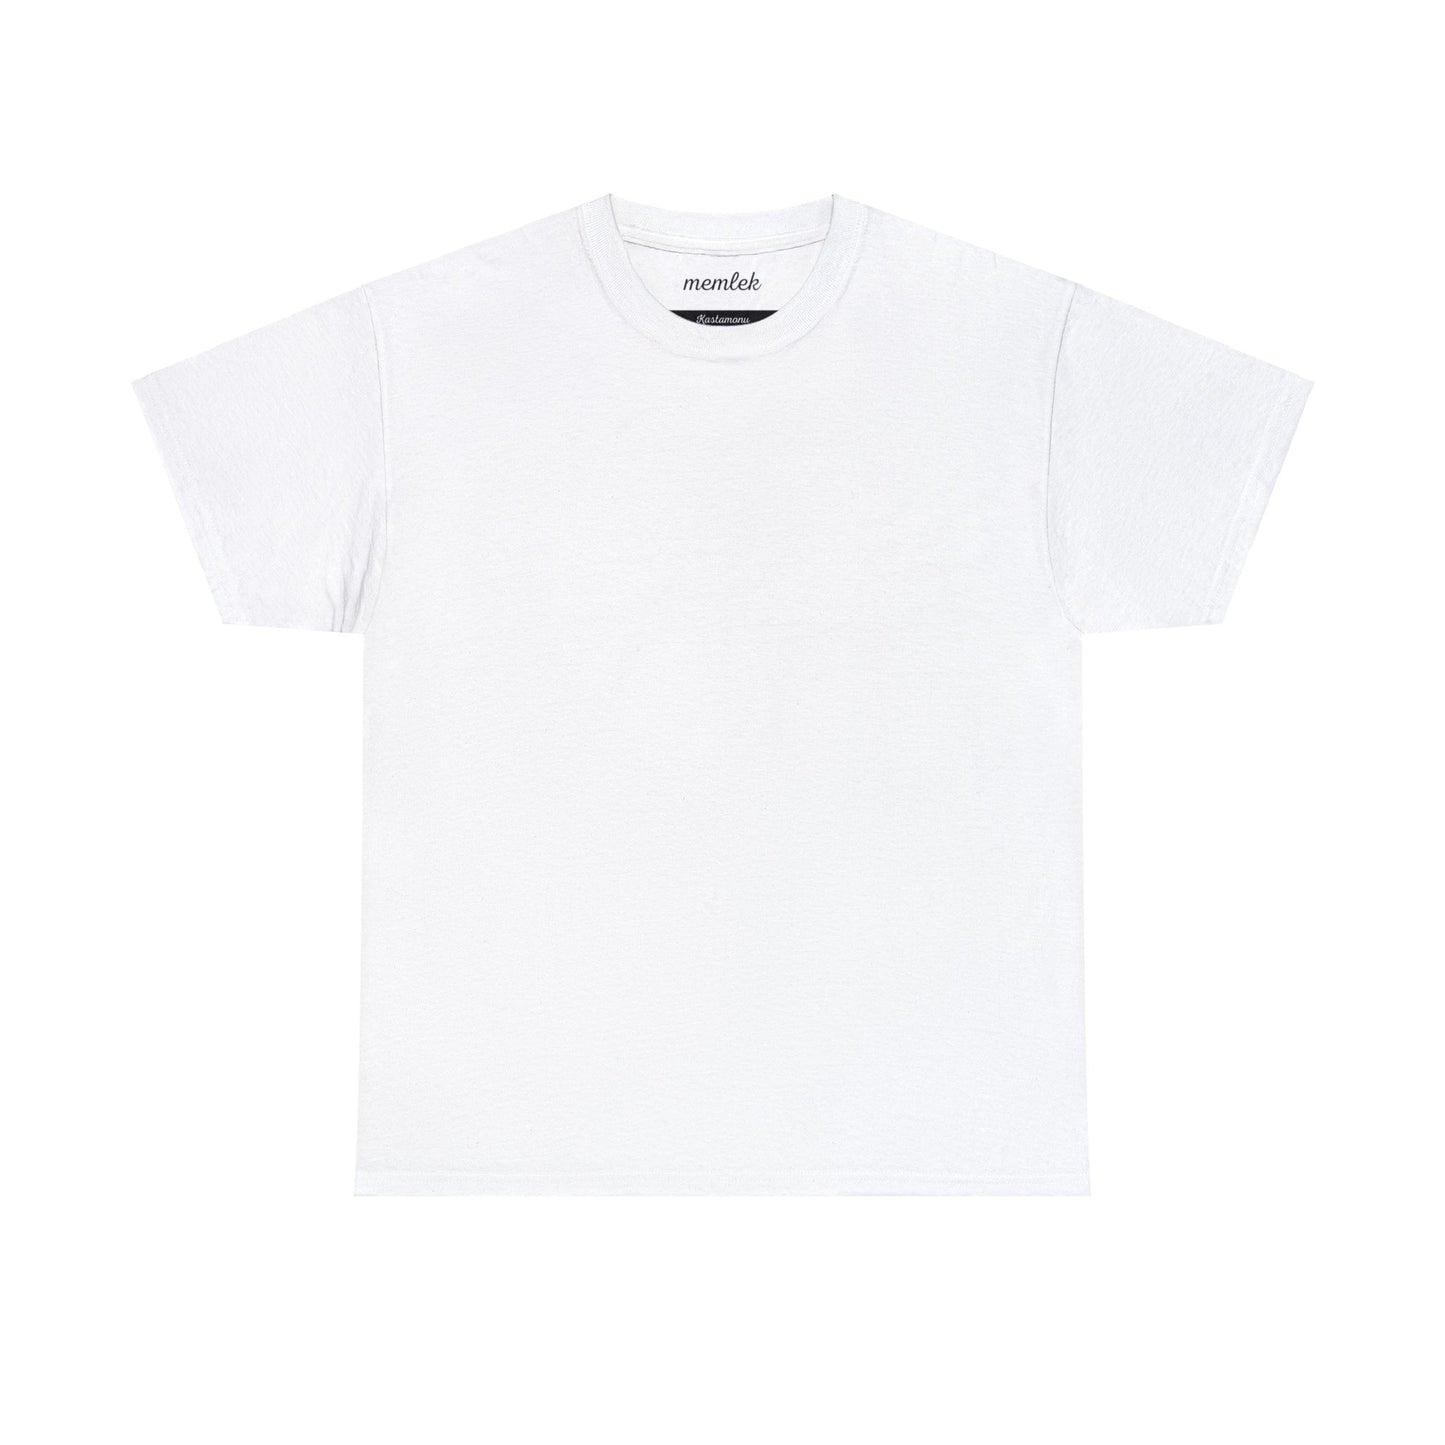 Kurt - 37 Kastamonu - T-Shirt - Back Print - Black/White